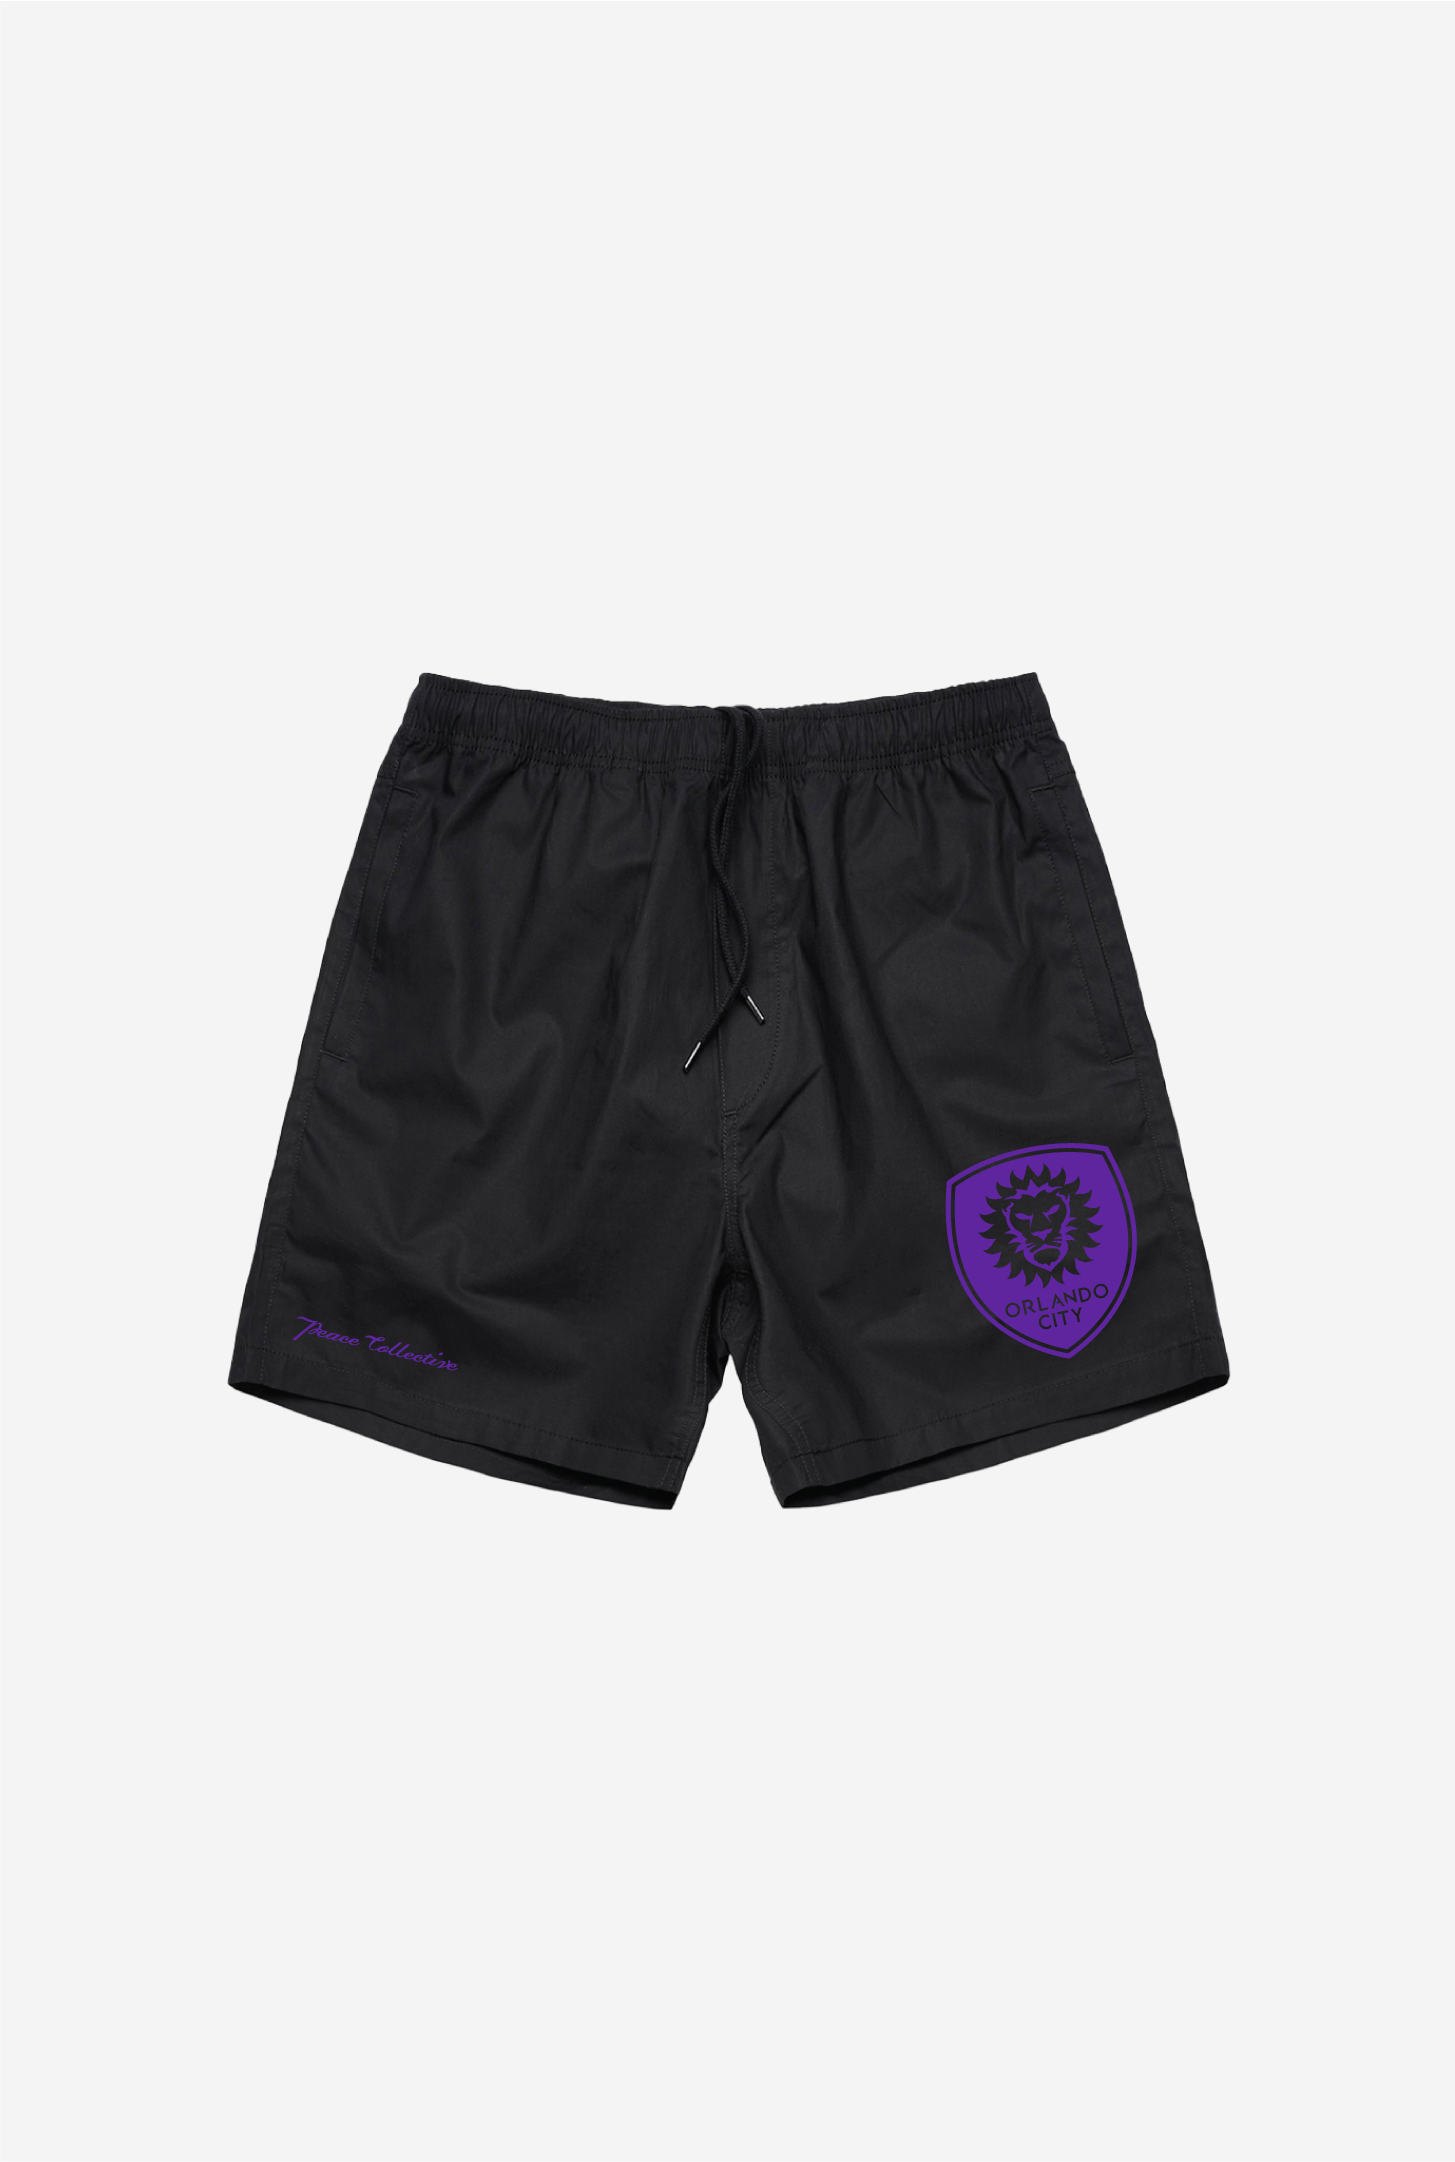 Orlando City SC Board Shorts - Black